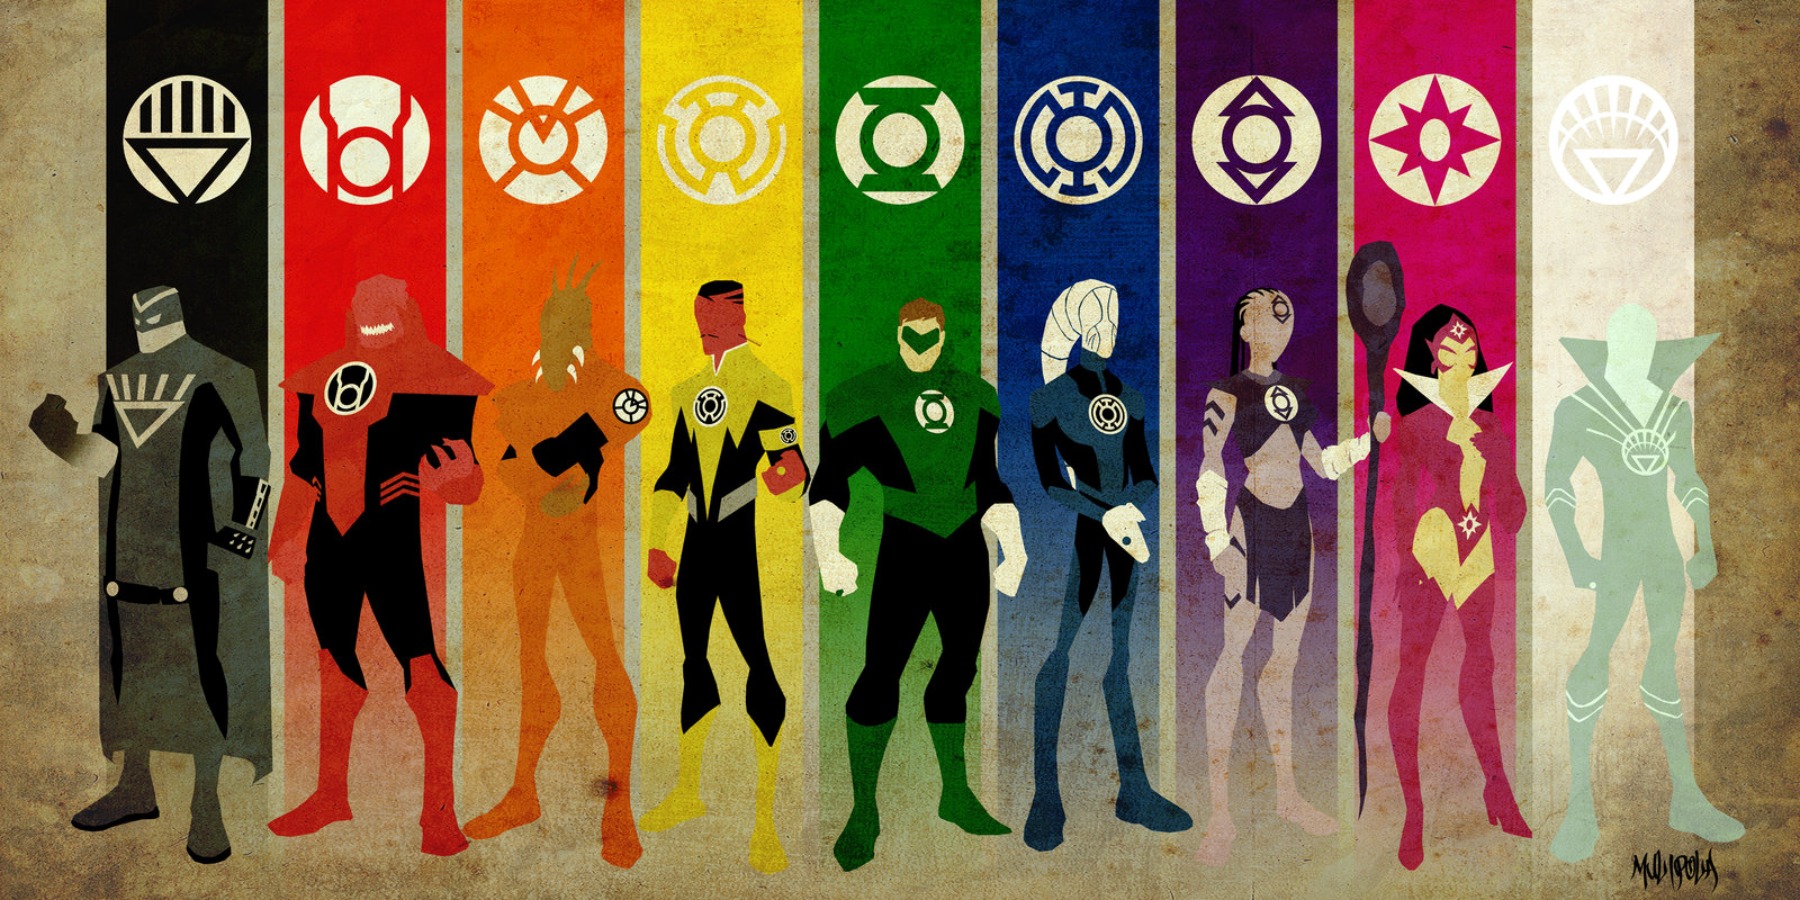 Green Lantern dc comics superhero g wallpaper background